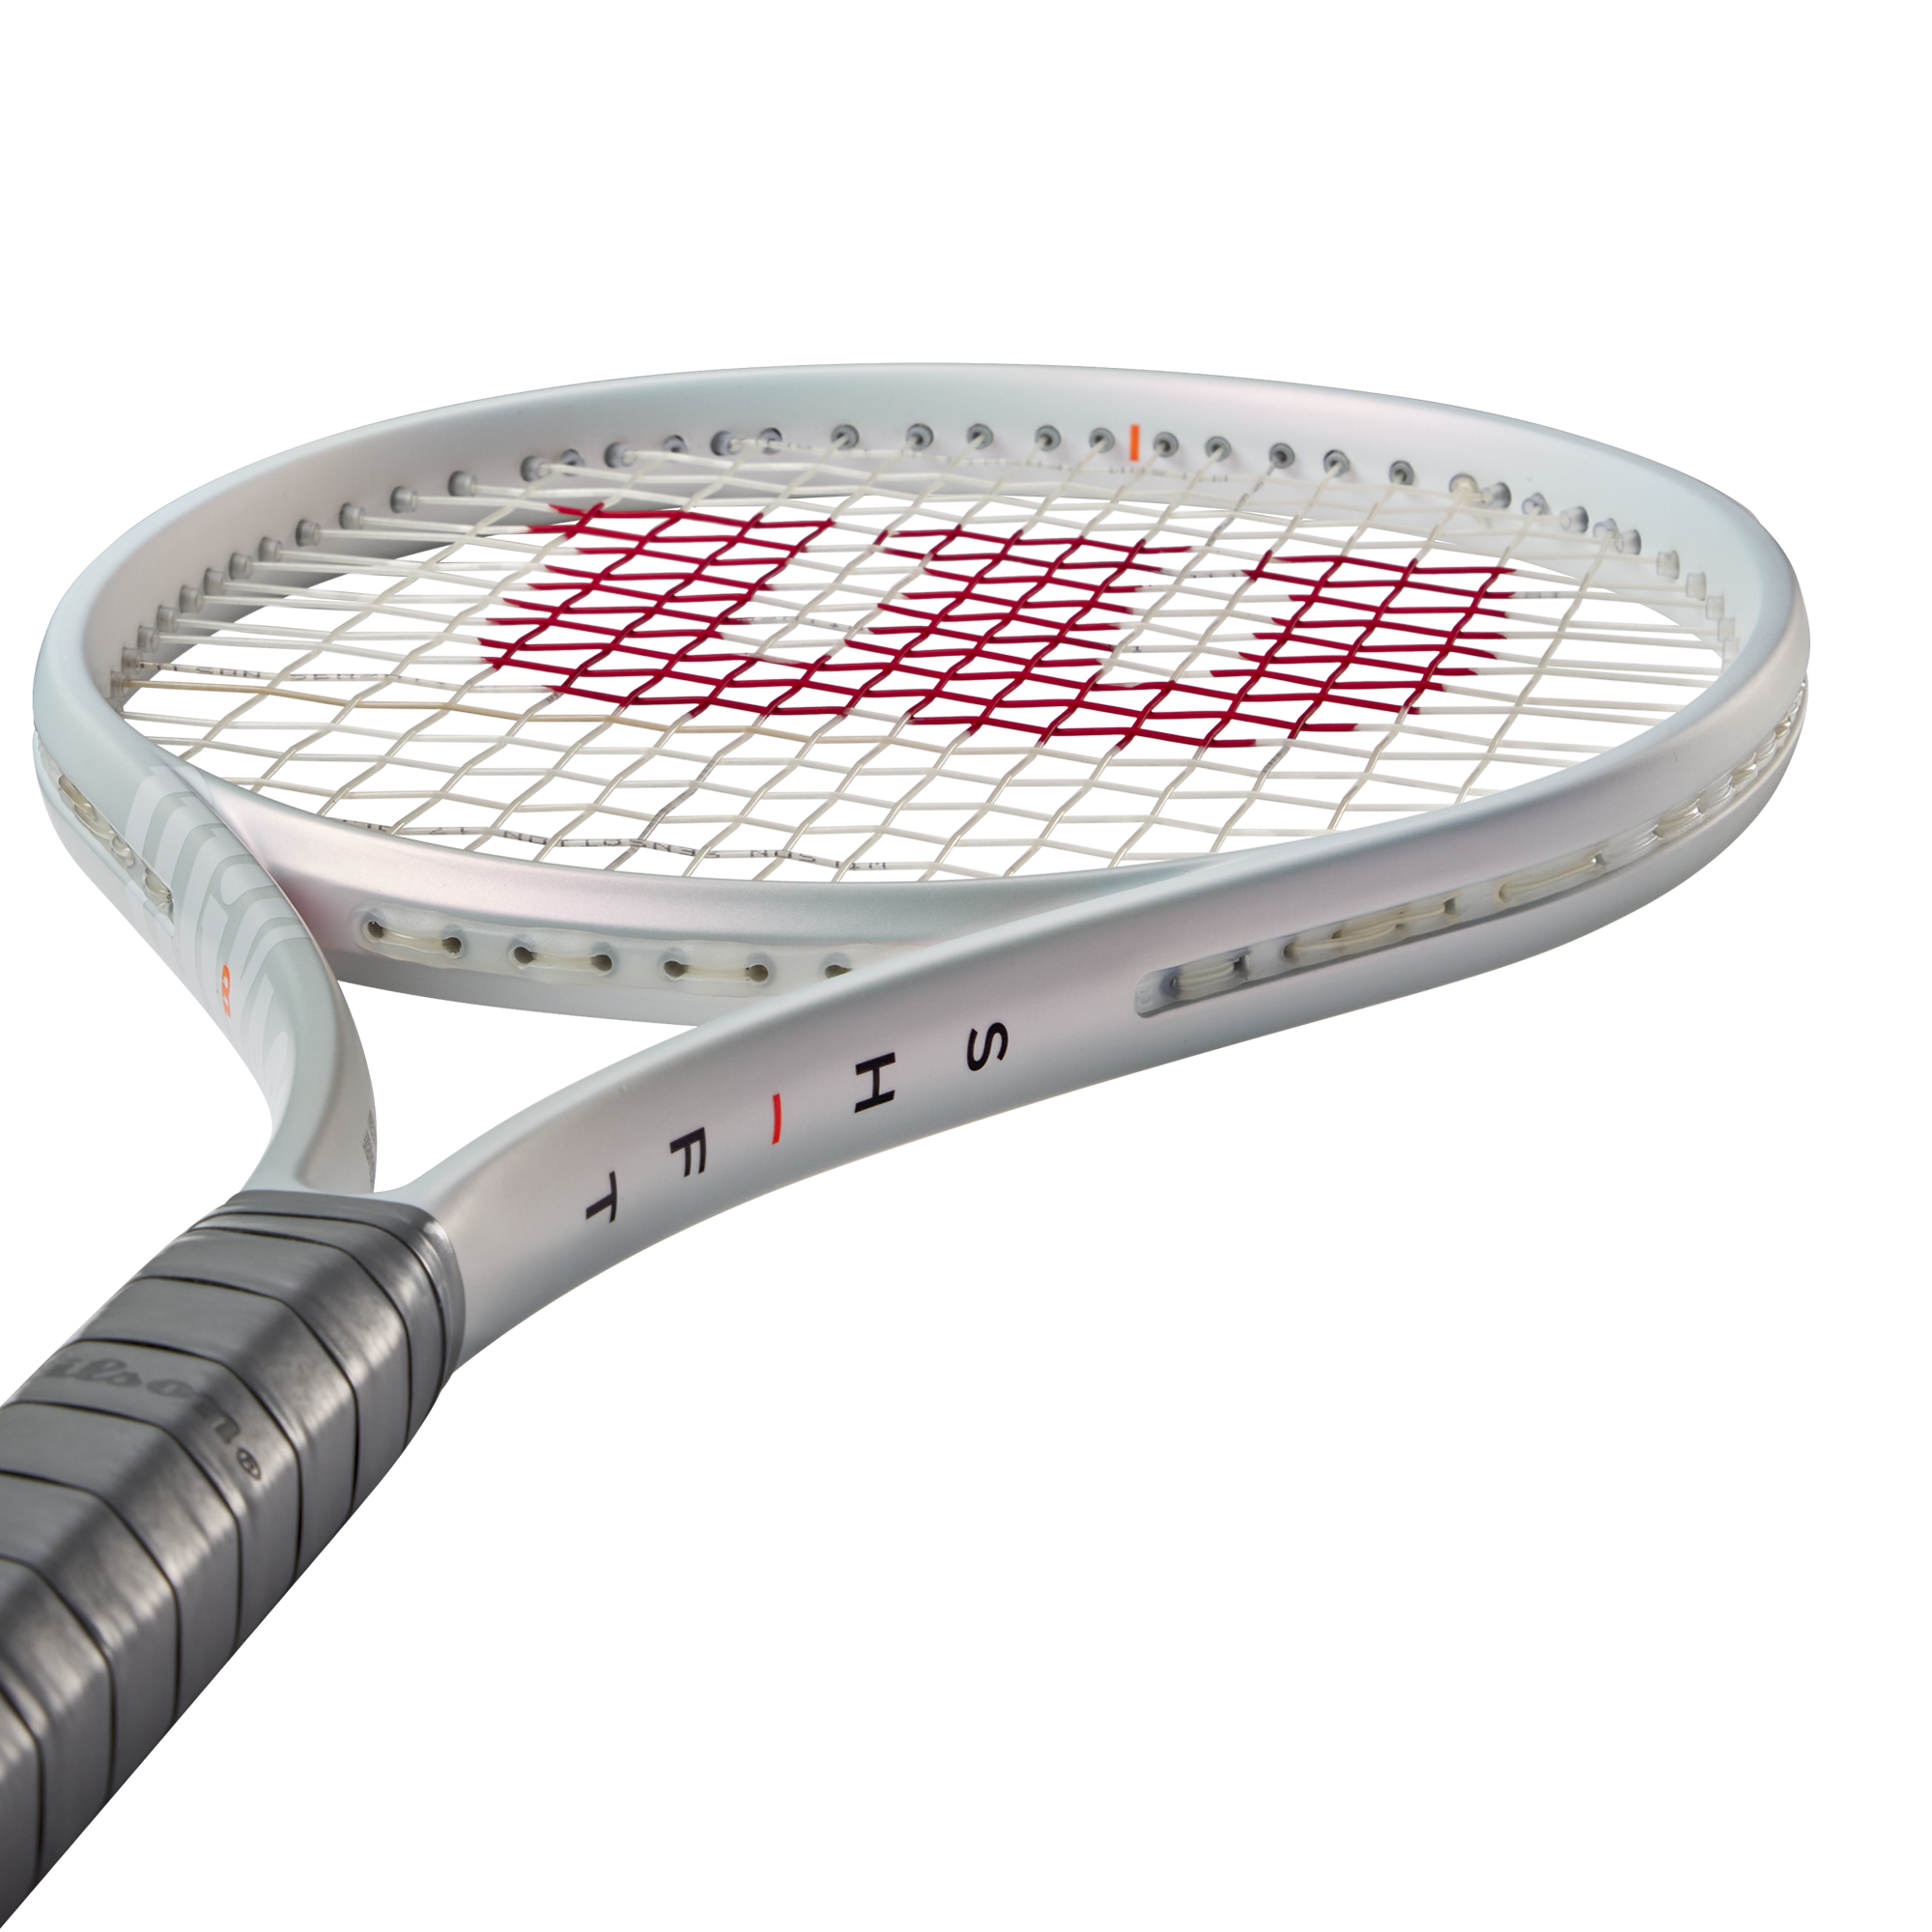 Wilson Shift 99L V1 Tennis Racquet